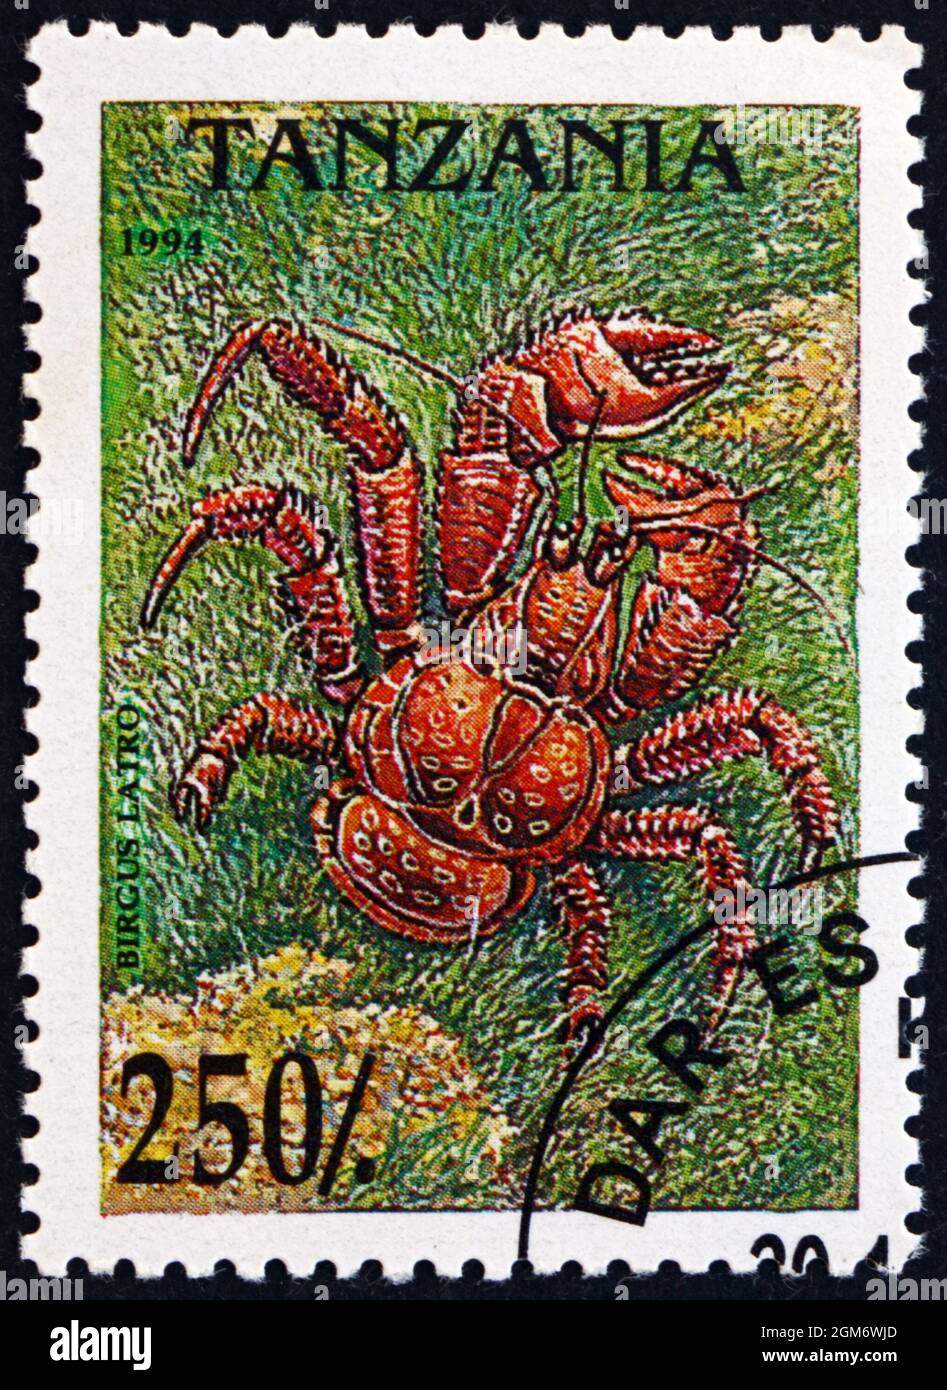 TANZANIA - CIRCA 1994: a stamp printed in Tanzania shows Coconut crab, birgus latro, is the largest land-living arthropod in the world, circa 1994 Stock Photo